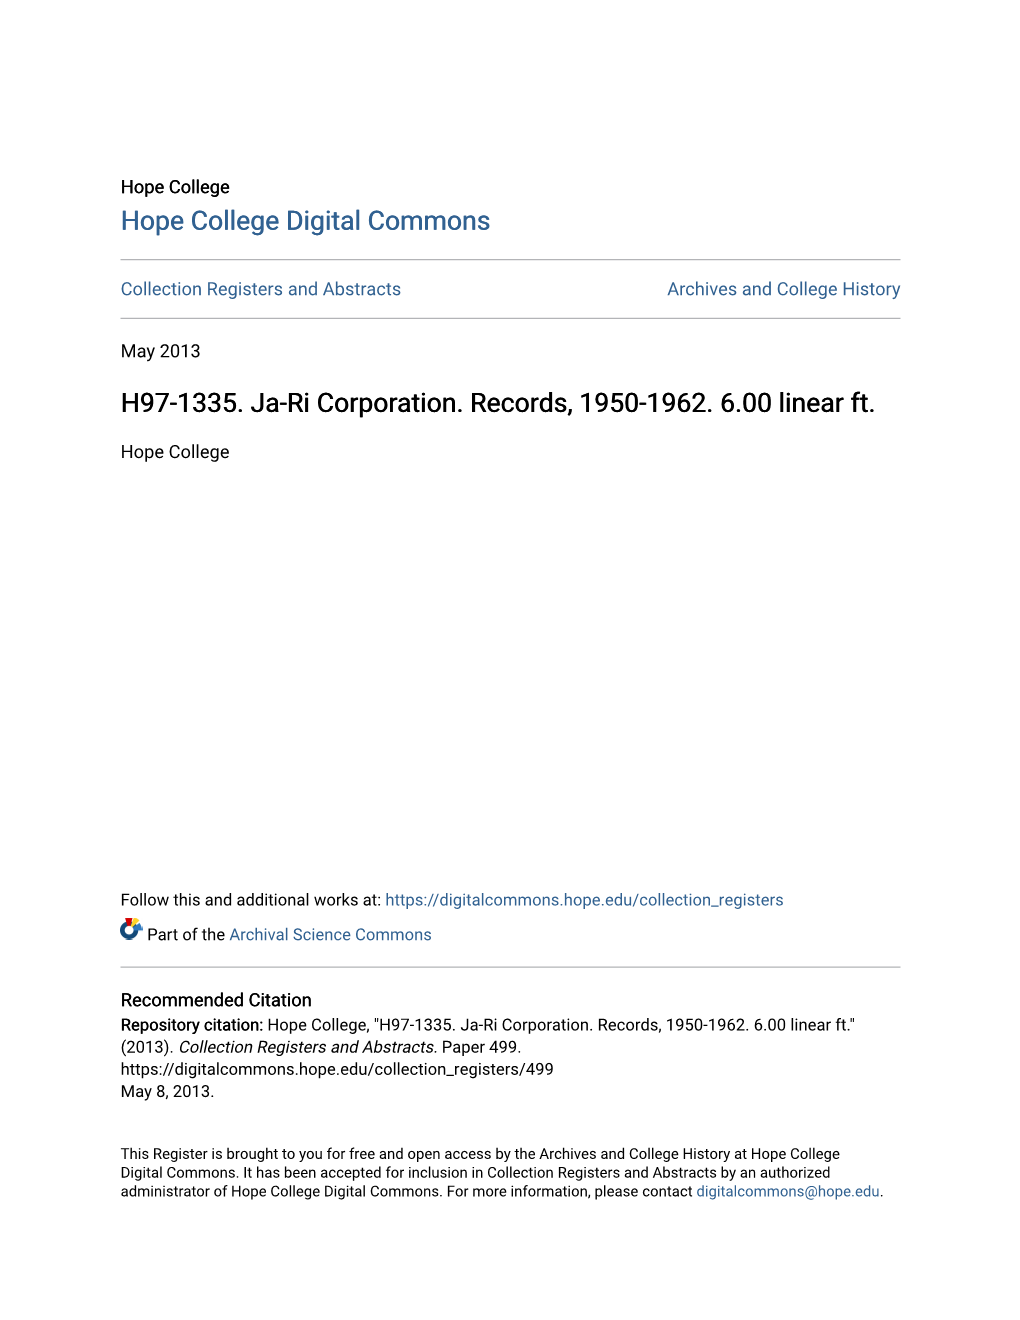 H97-1335. Ja-Ri Corporation. Records, 1950-1962. 6.00 Linear Ft